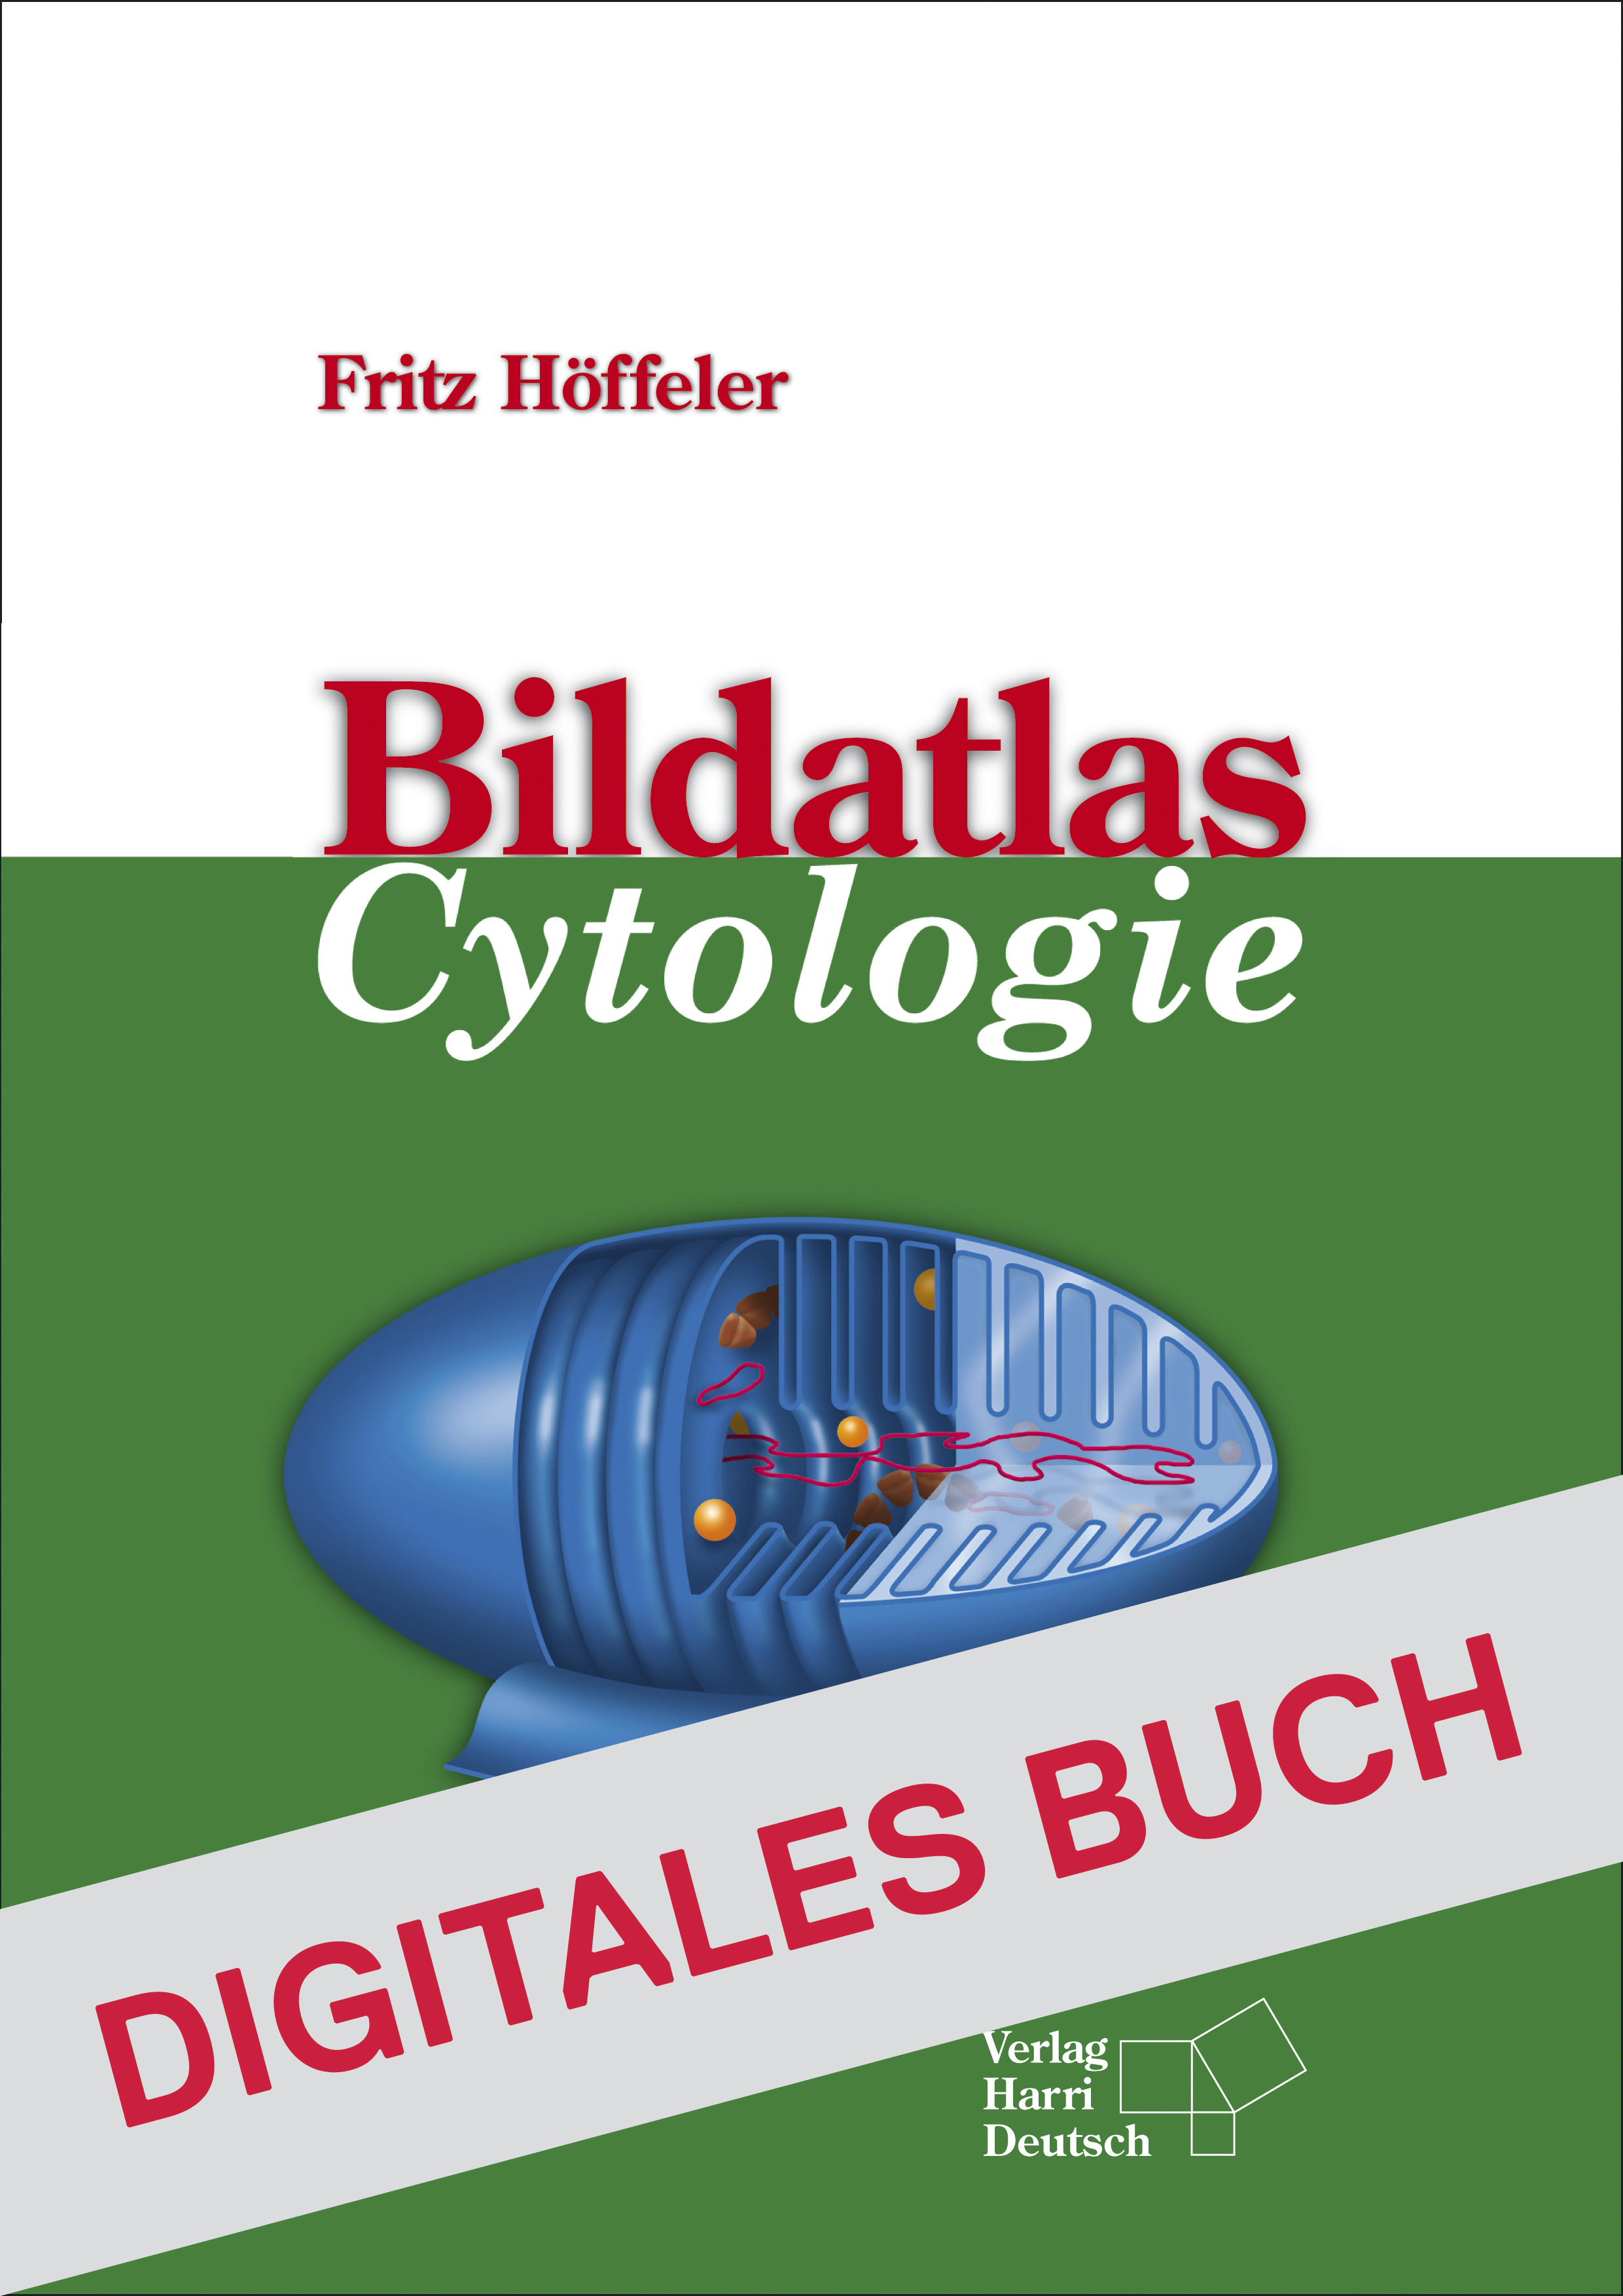 Bildatlas Cytologie - Digitales Buch